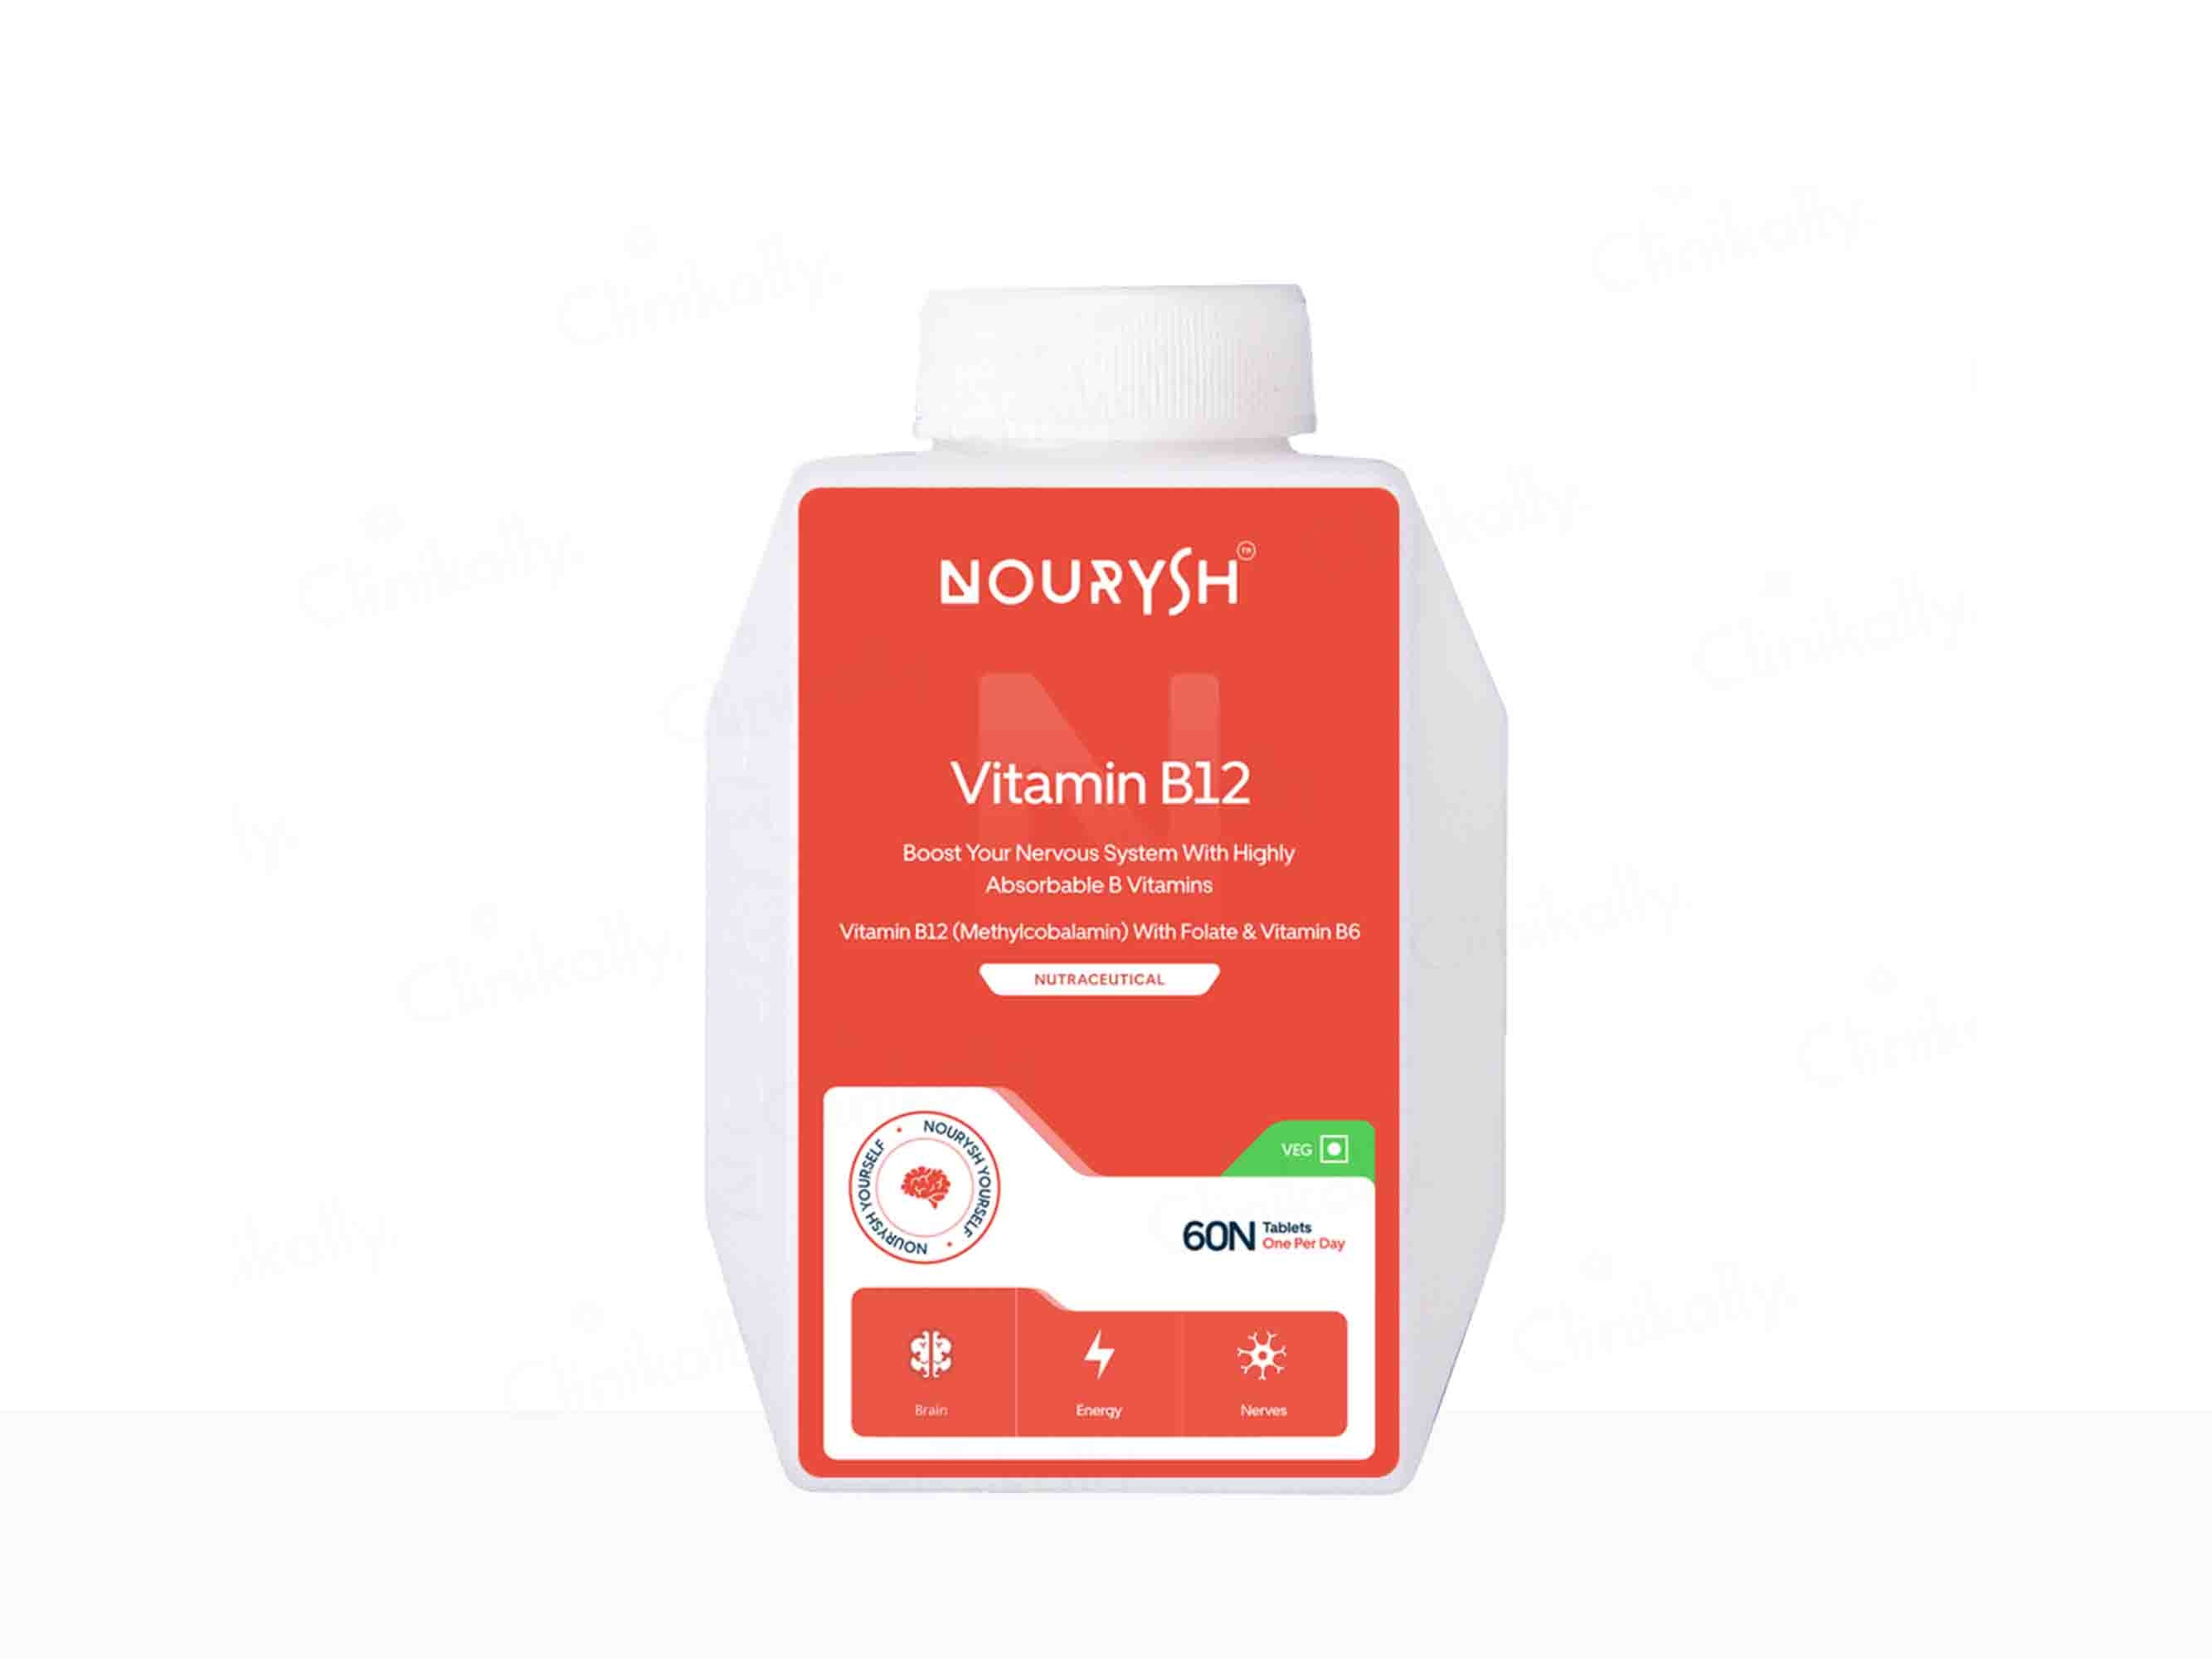 Nourysh Vitamin B-12 (Methylcobalamin) With Folate & Vitamin B6 Tablet